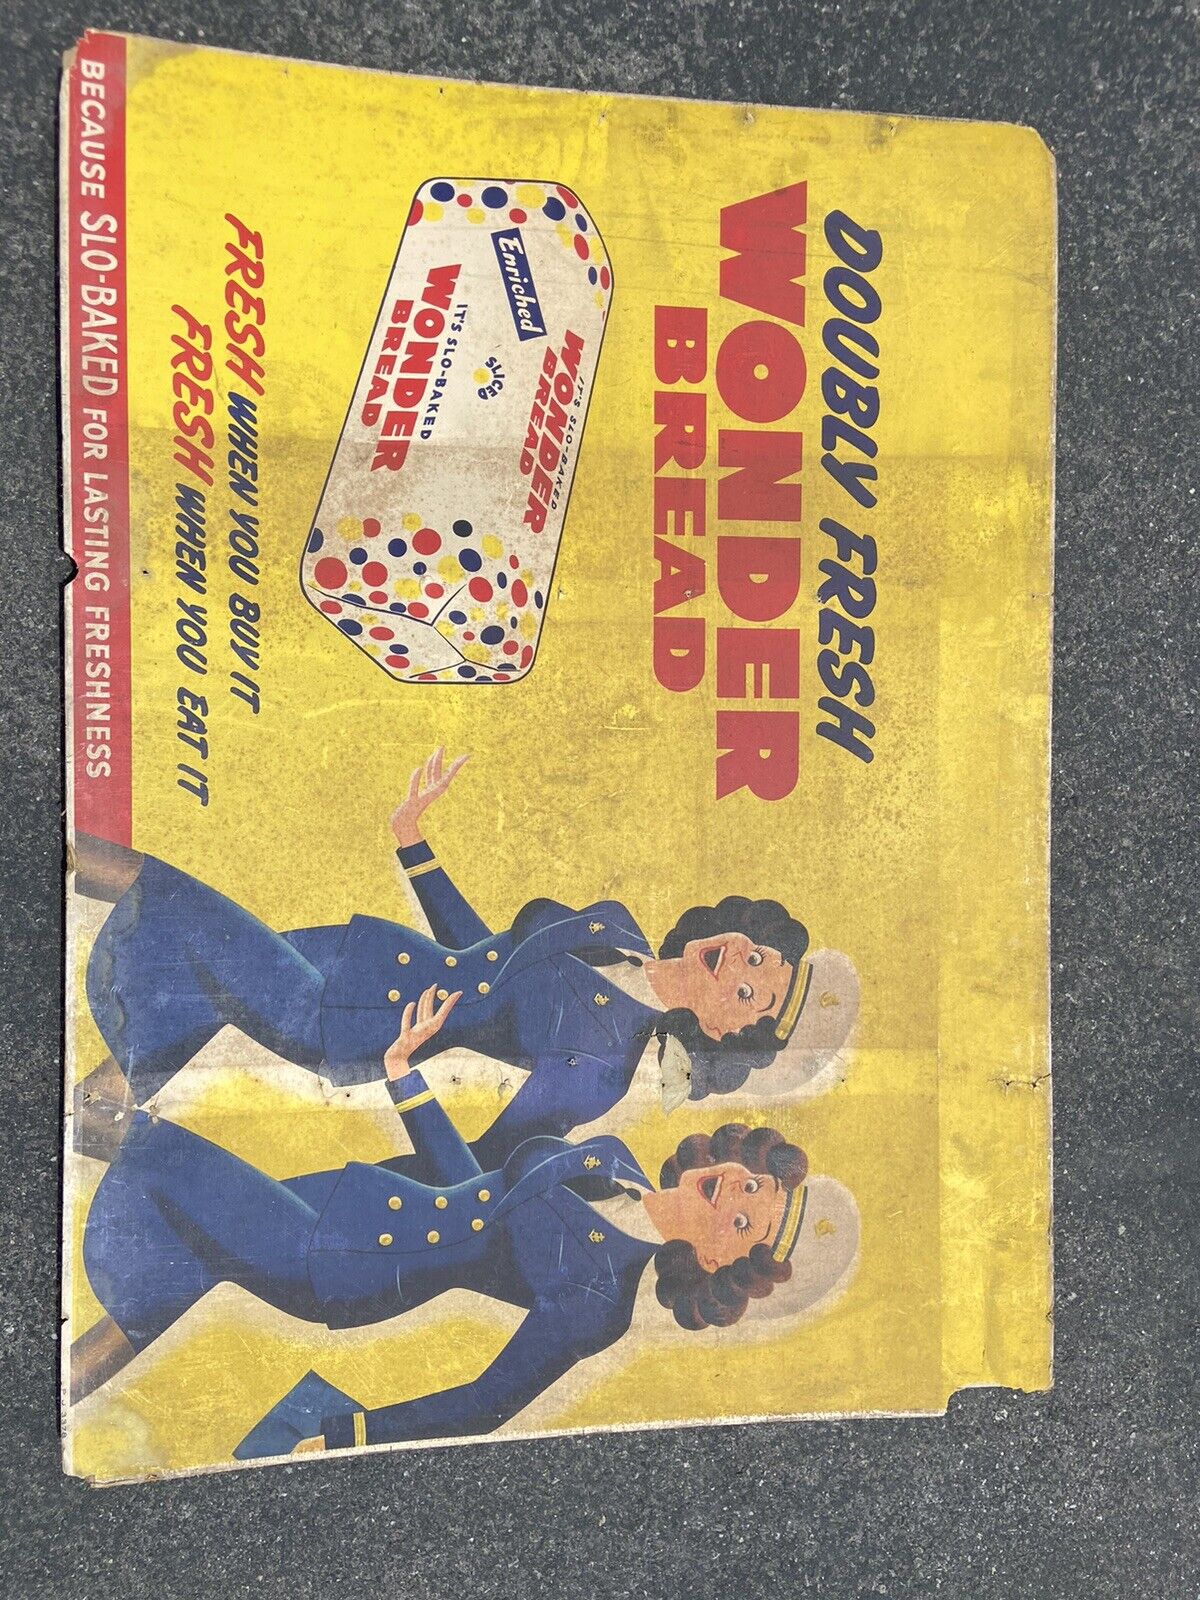 Vintage Wonder Bread Cardboard Slo-Baked Store Advertising Sign WW2 Era